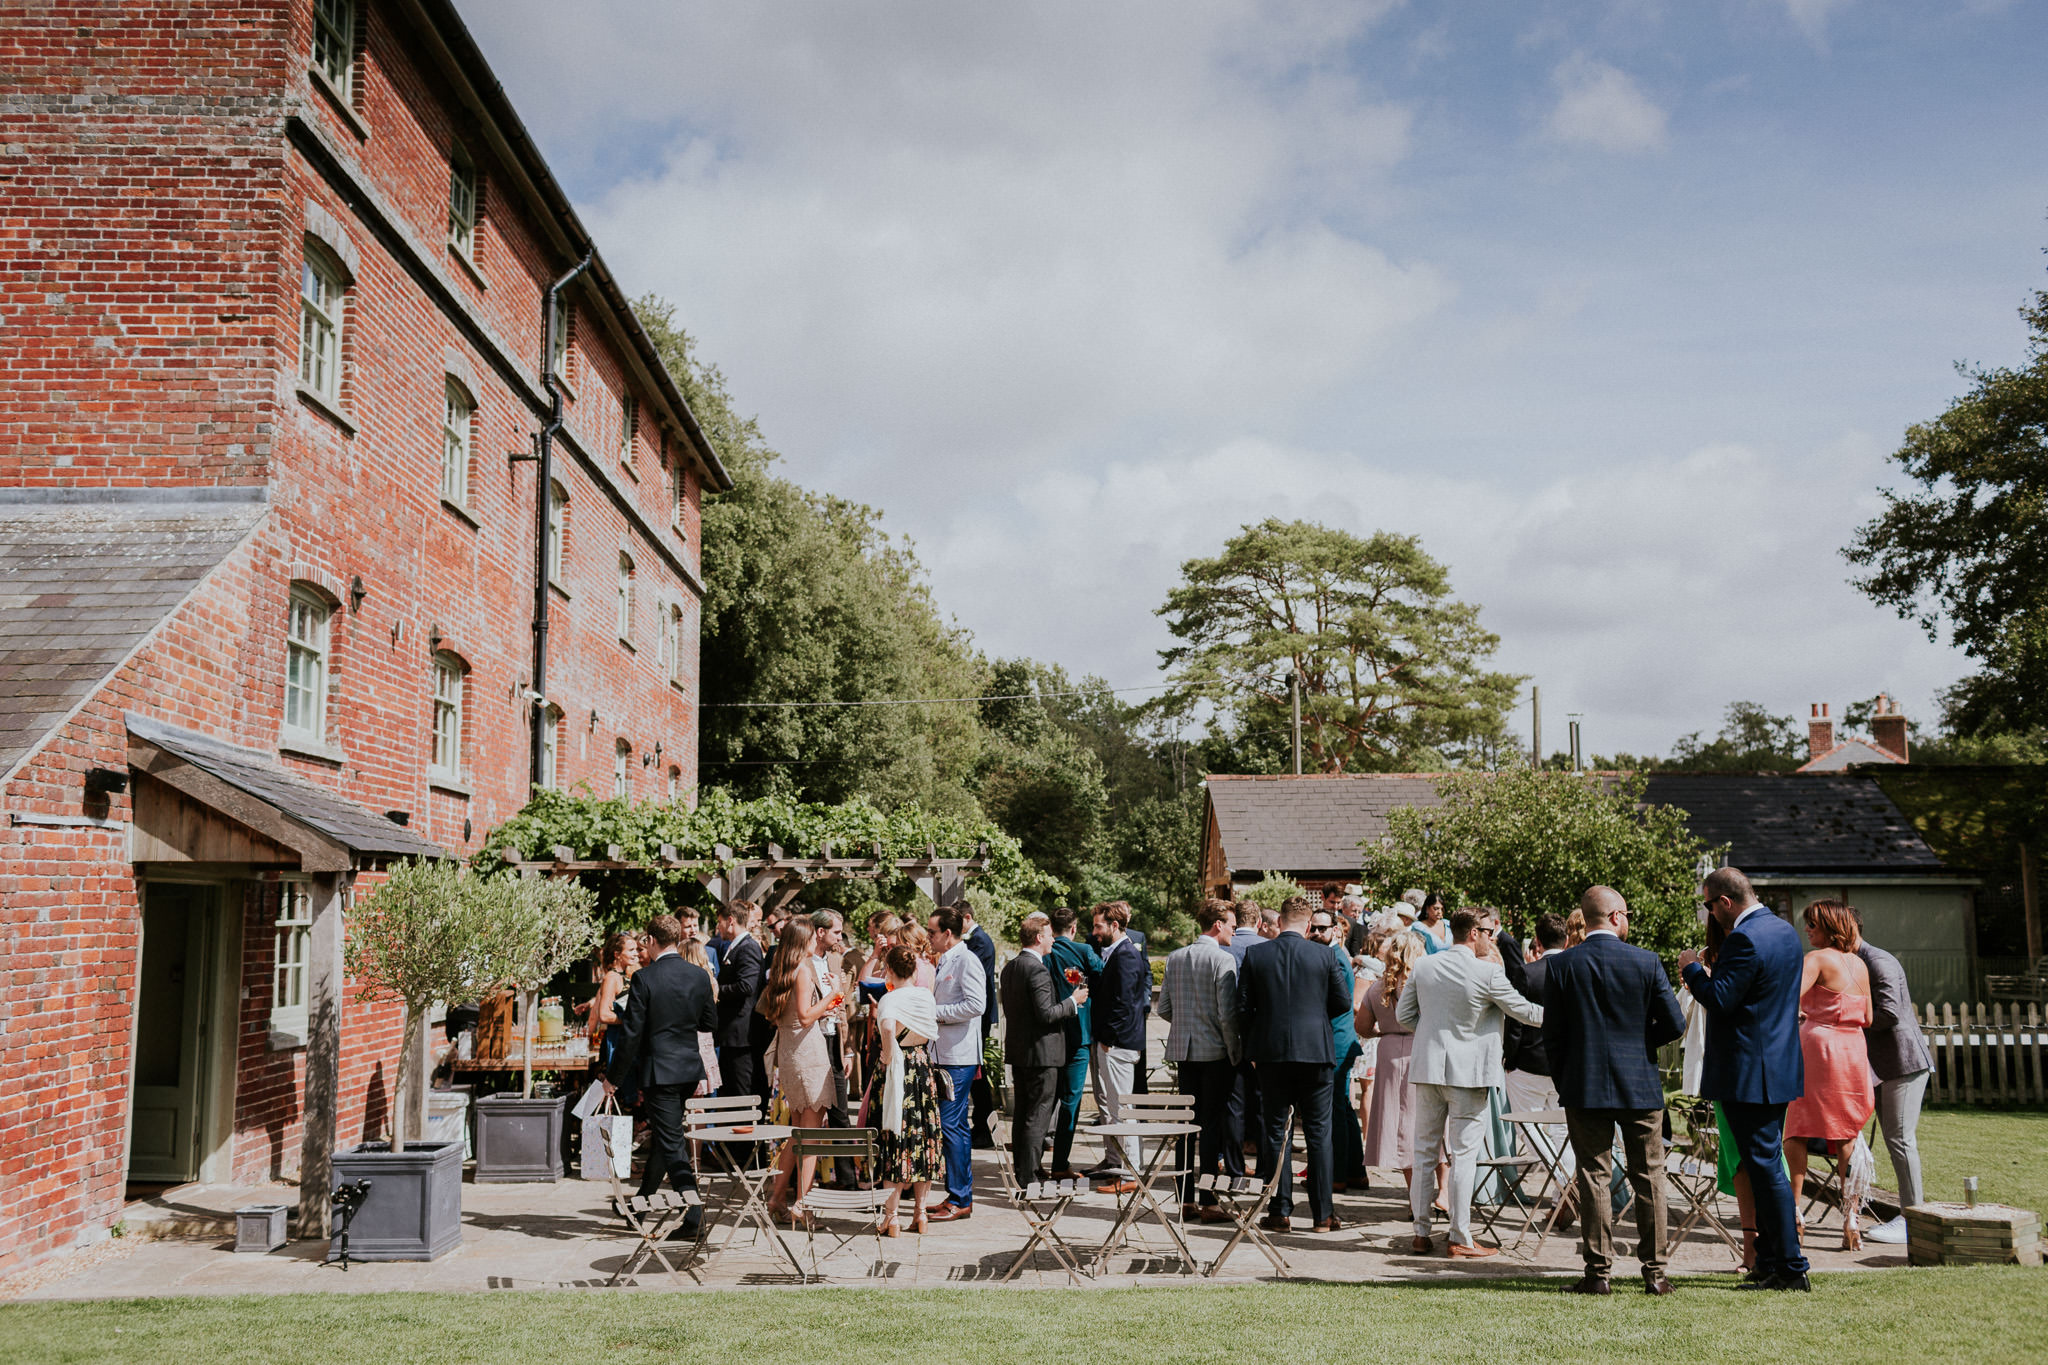 Wedding Photographer Dorset | Sopley Mill Wedding